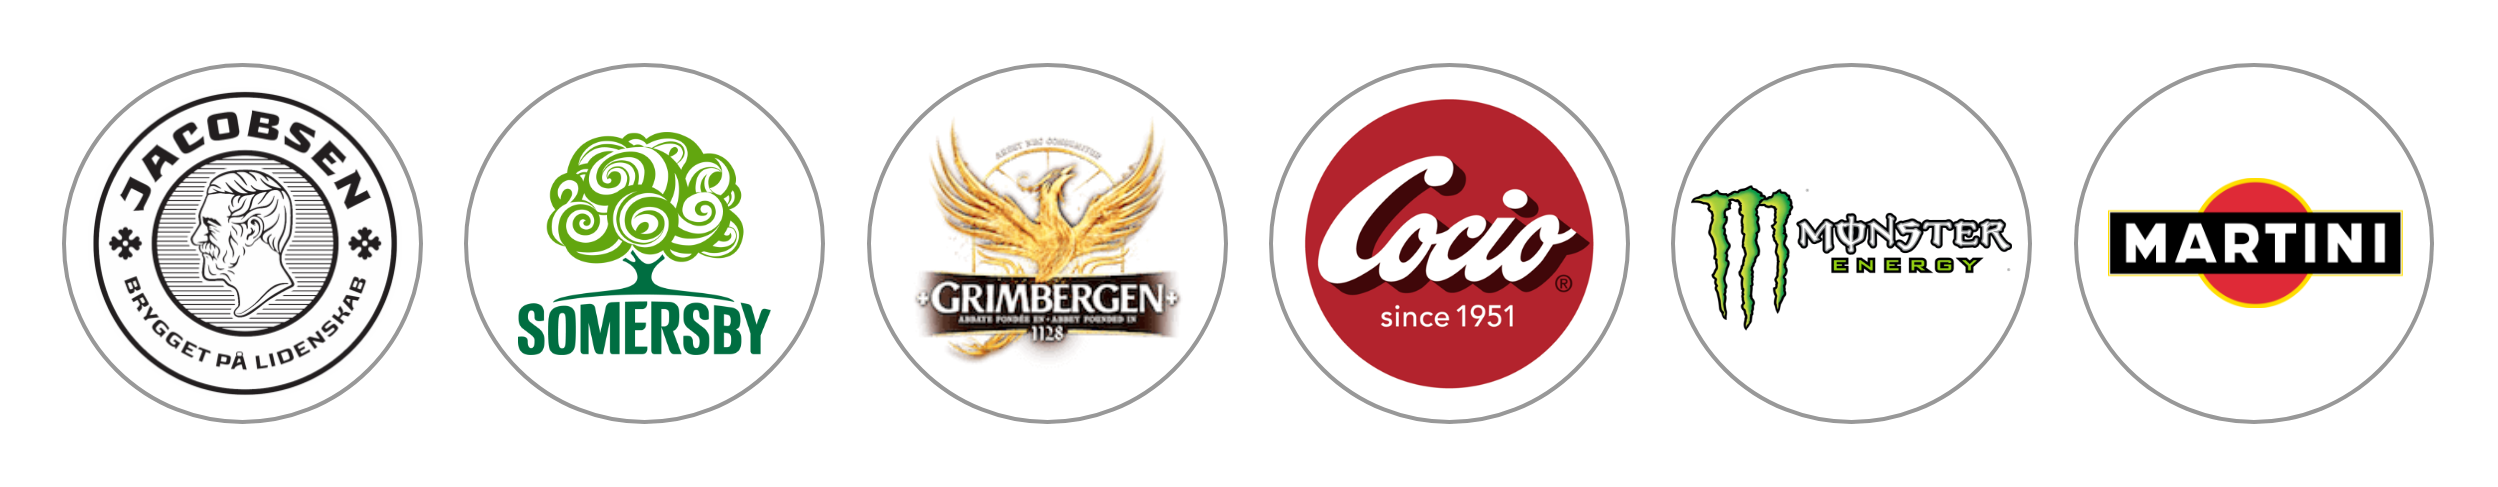 carlsberg brands